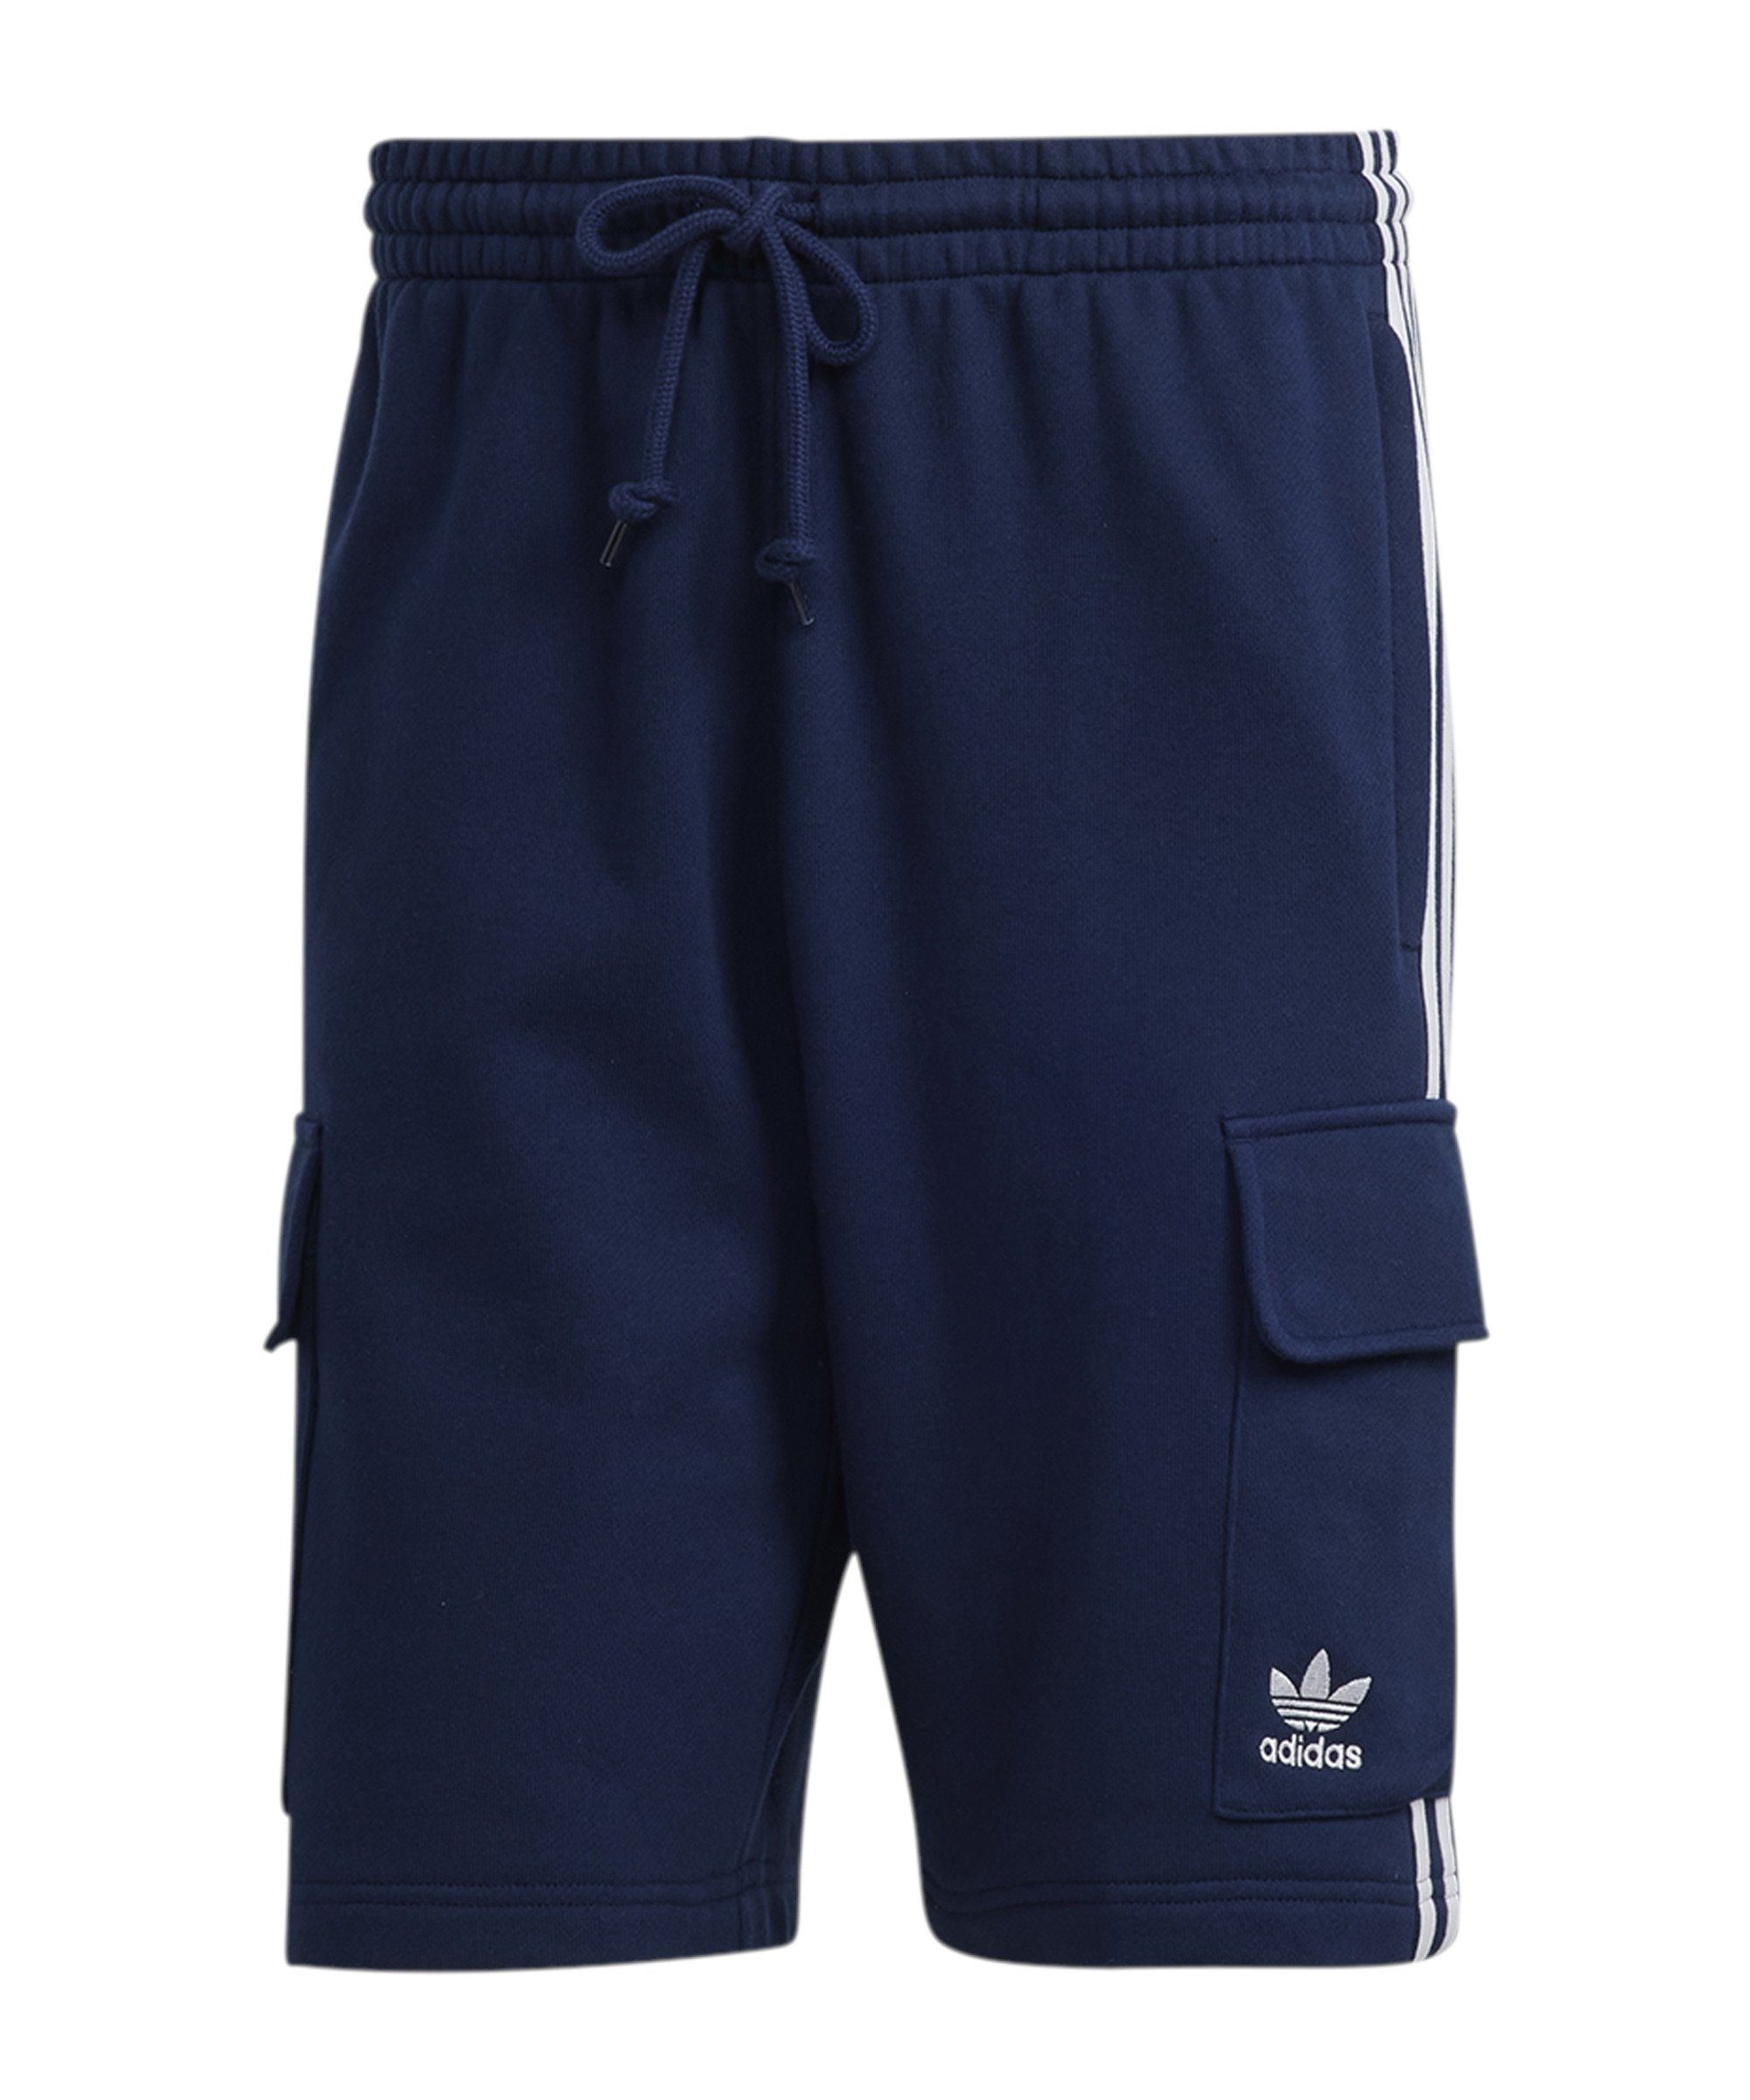 Originals Jogginghose Cargo adidas 3S blau Short